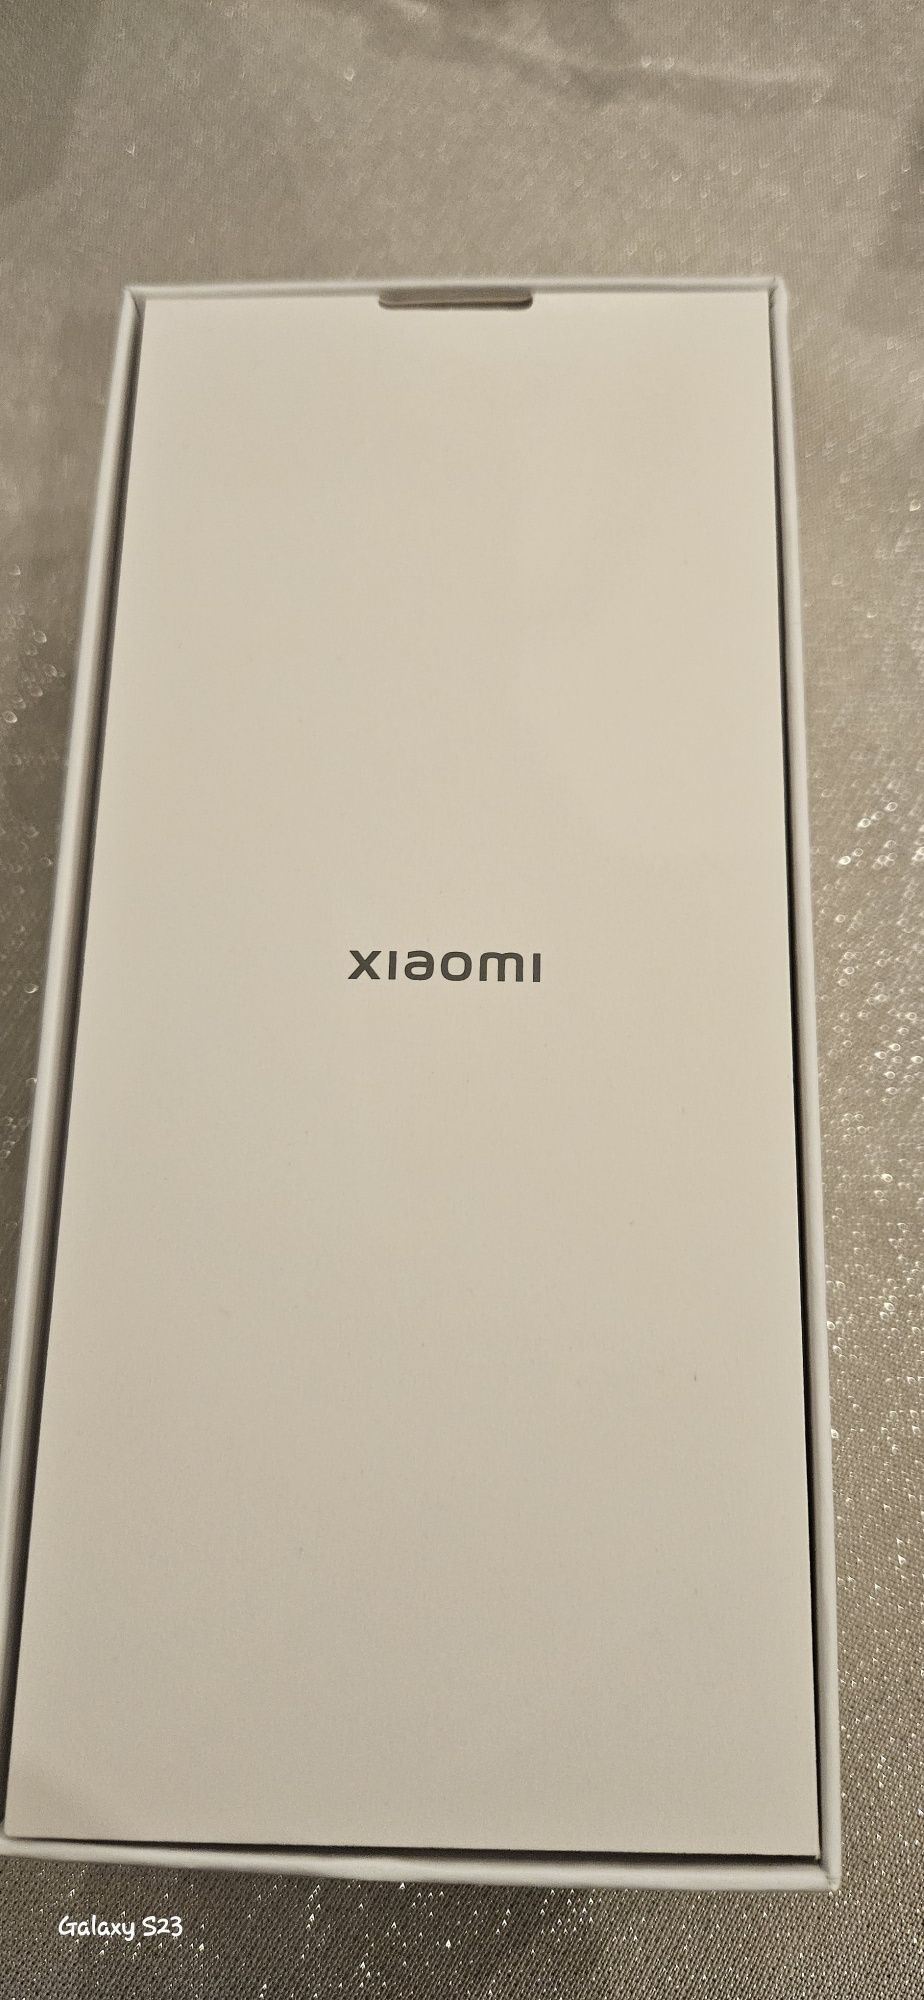 Xiaomi 11T Pro 8GB/256GB Meteorite Gray

Zestaw zawiera: